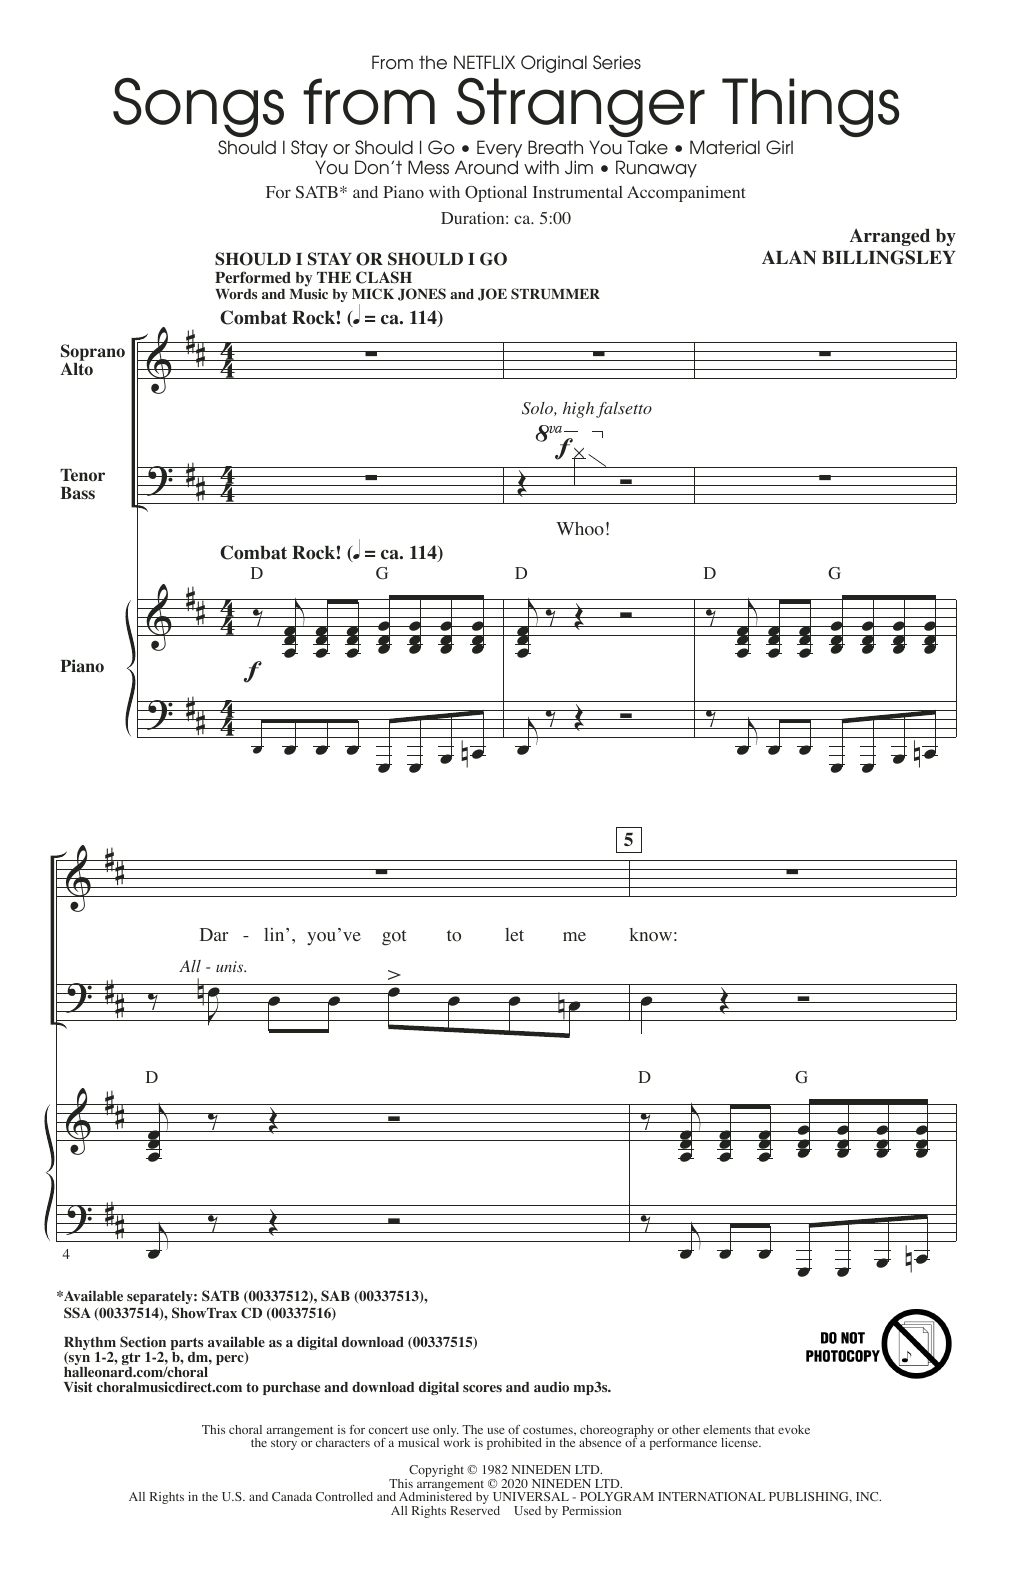 Alan Billingsley Songs from Stranger Things (arr. Alan Billingsley) Sheet Music Notes & Chords for SSA Choir - Download or Print PDF